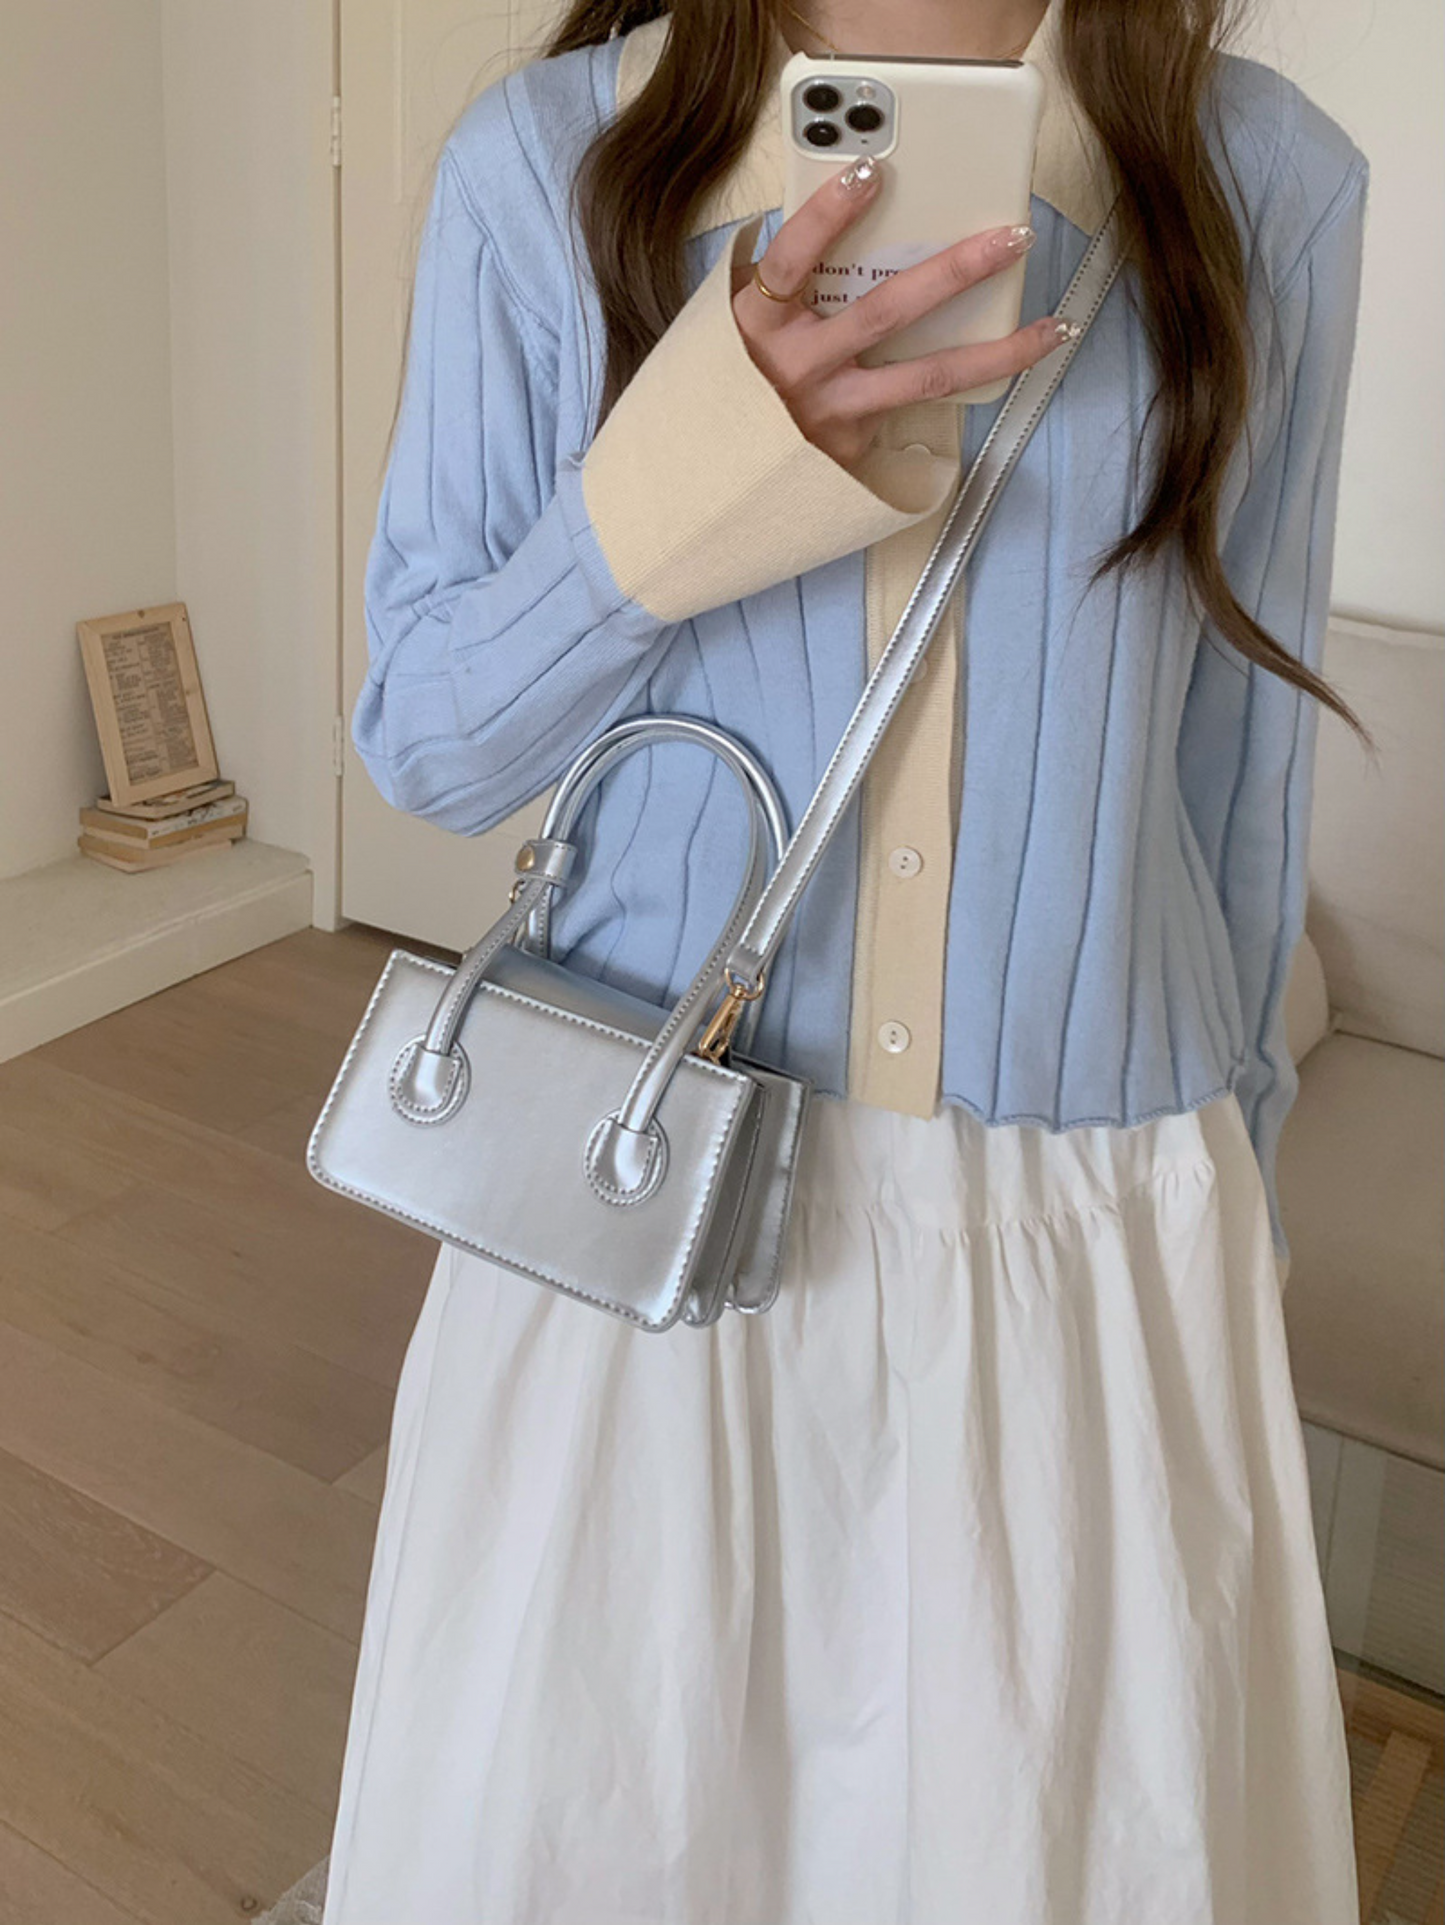 Mini Square Chic Handbag with Crossbody Strap - JoyDion